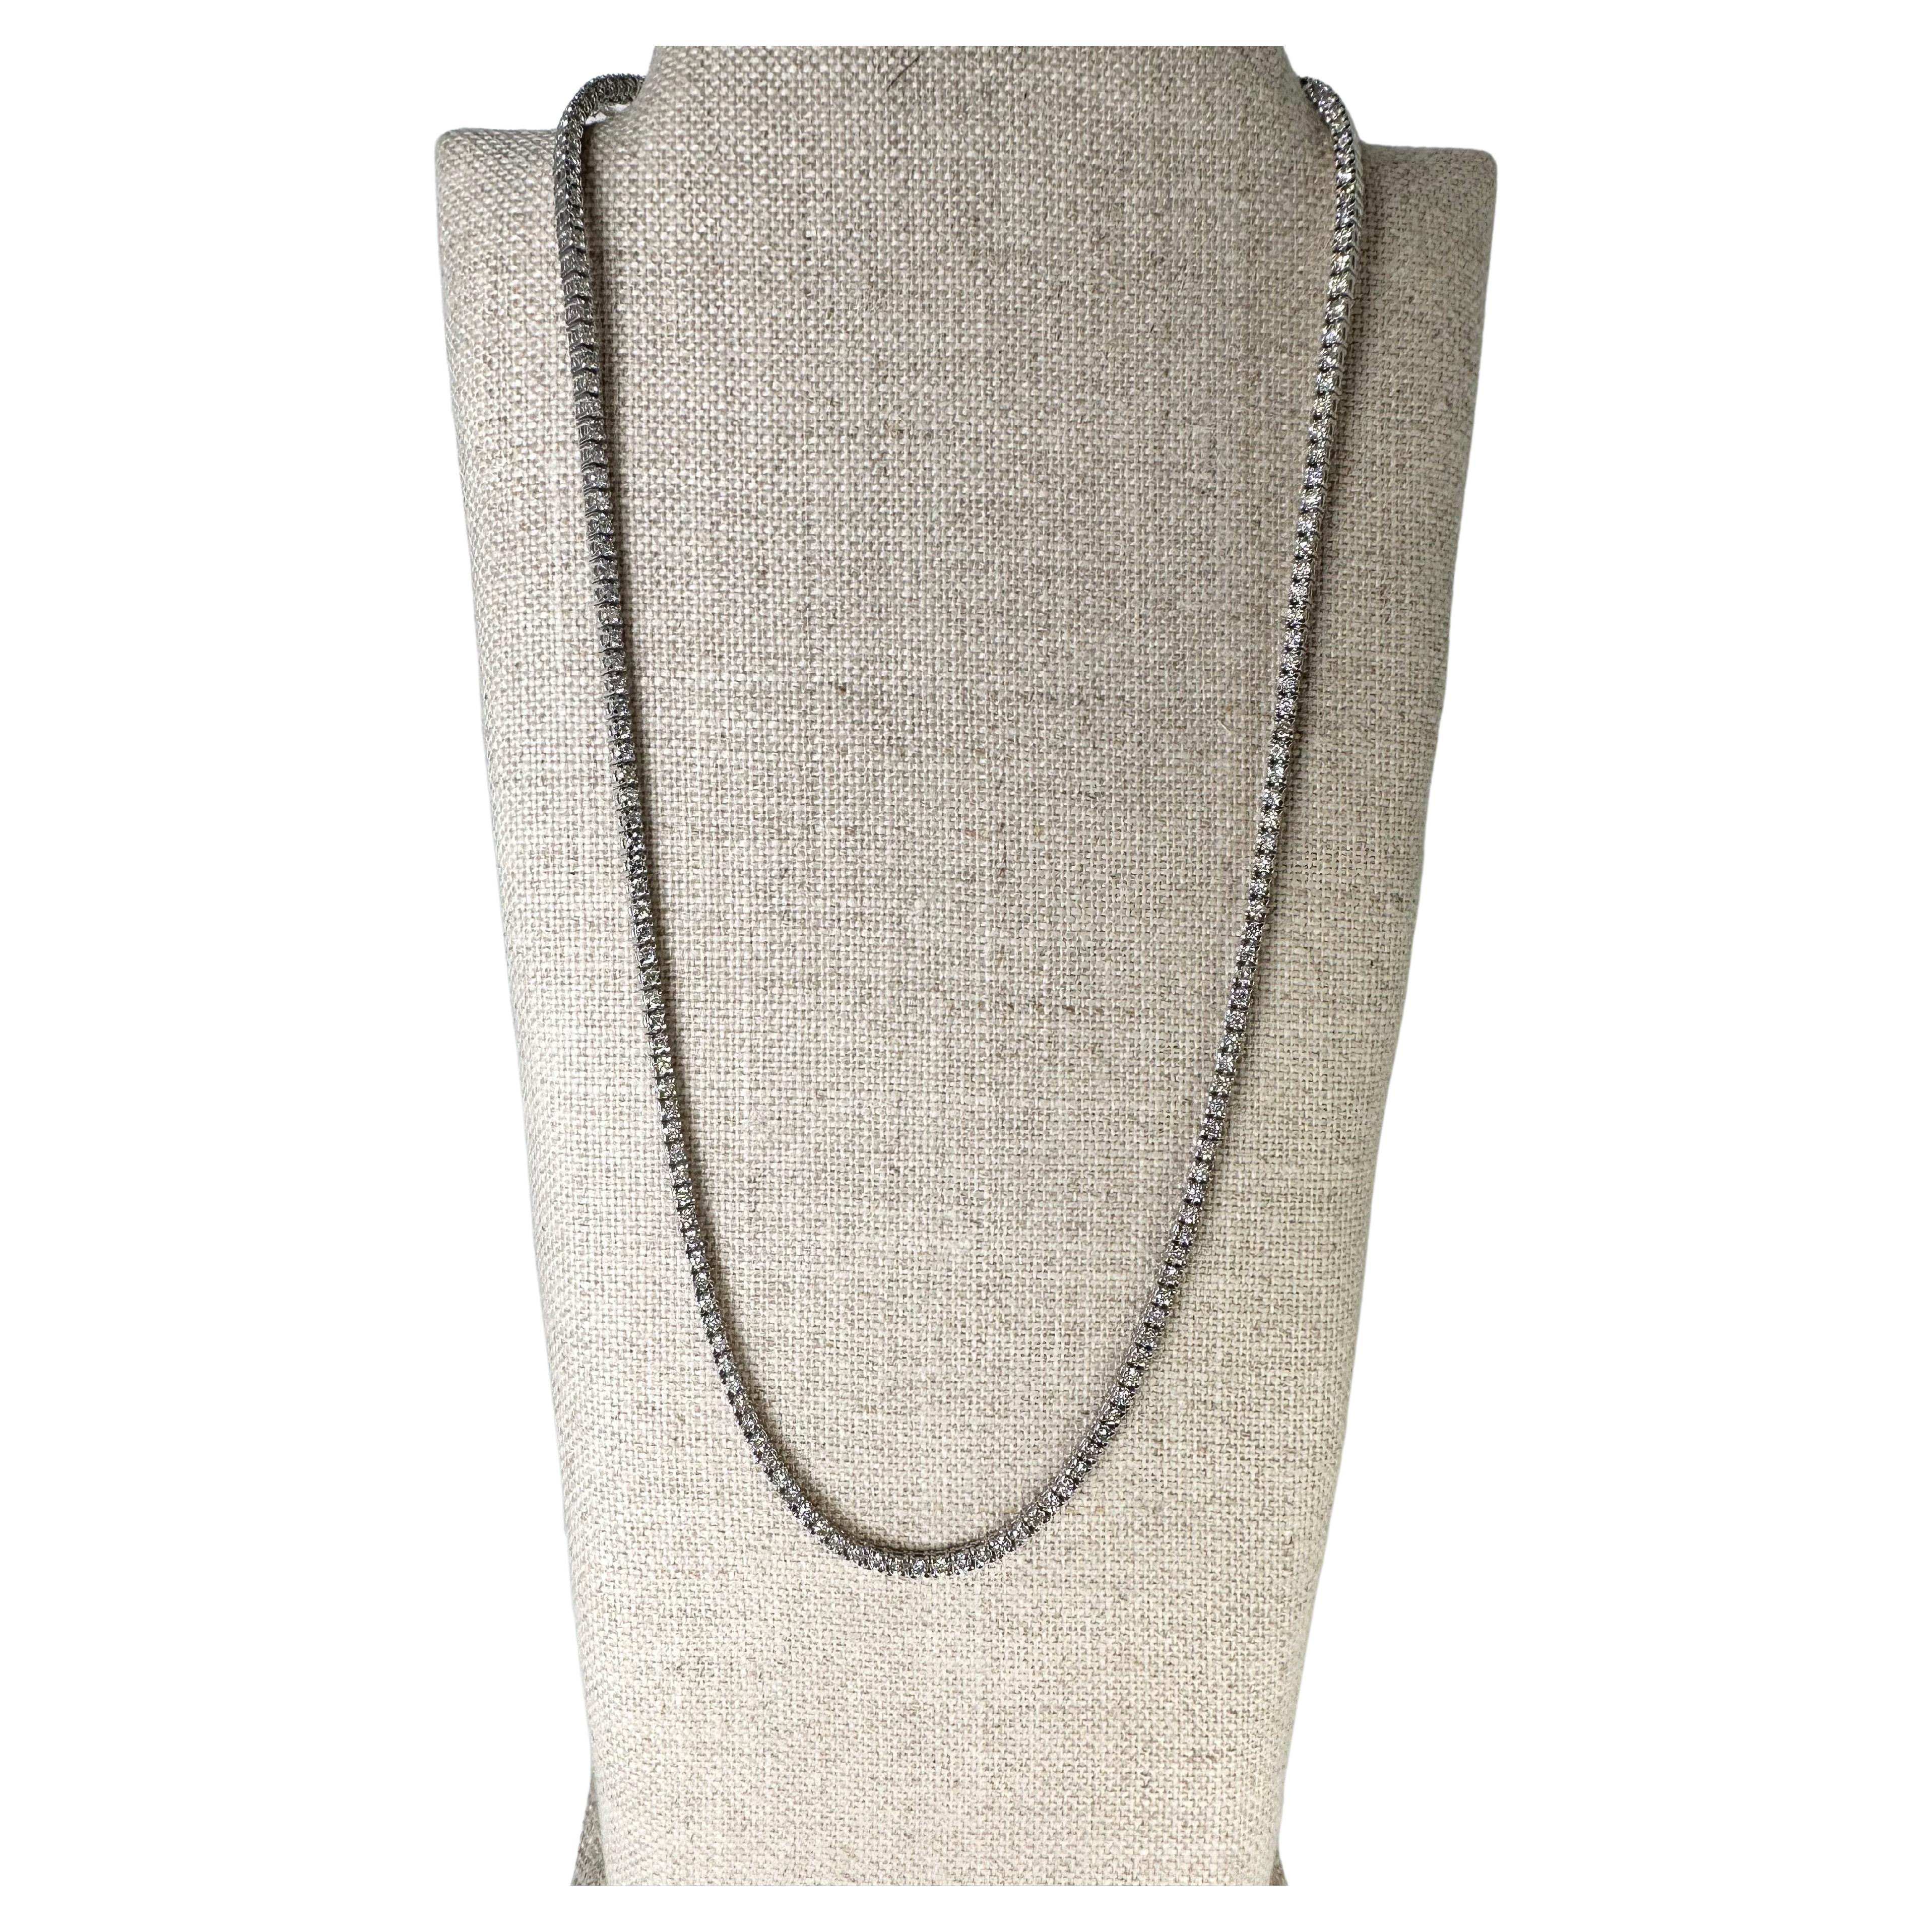 Collier de tennis en diamant en or blanc 14kt 3.51ct 16 Inches Long Necklace Chocker